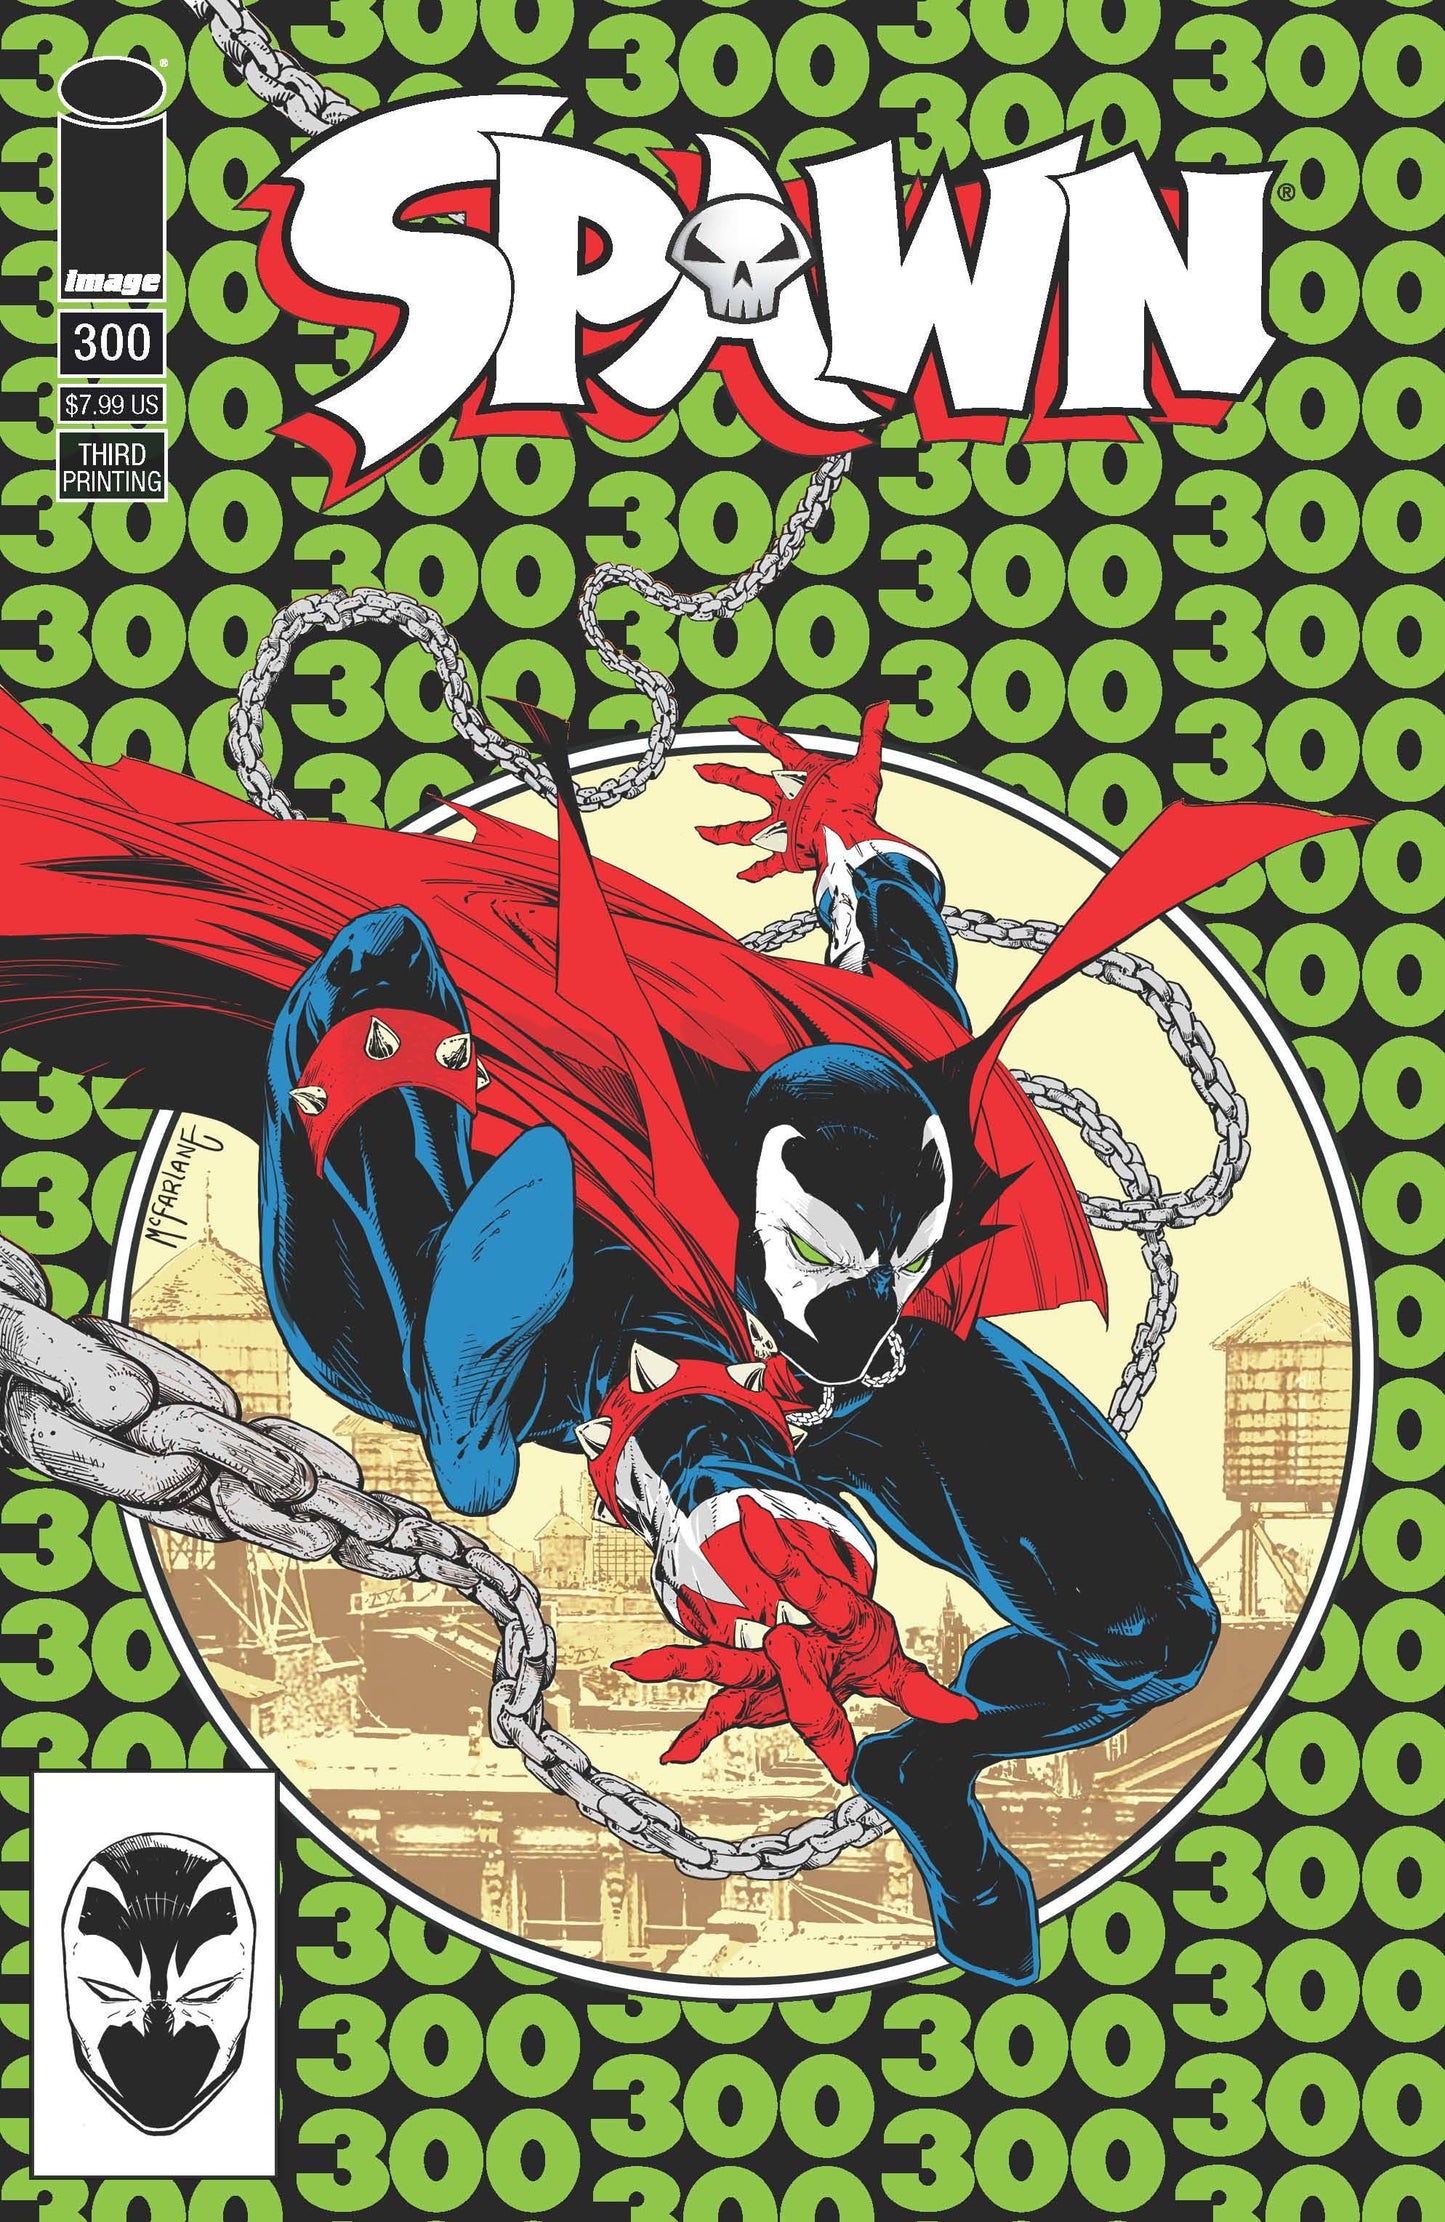 SPAWN #300 3rd Print Amazing Spider-Man 300 Todd MCFARLANE Homage Variant (11/06/2019) IMAGE